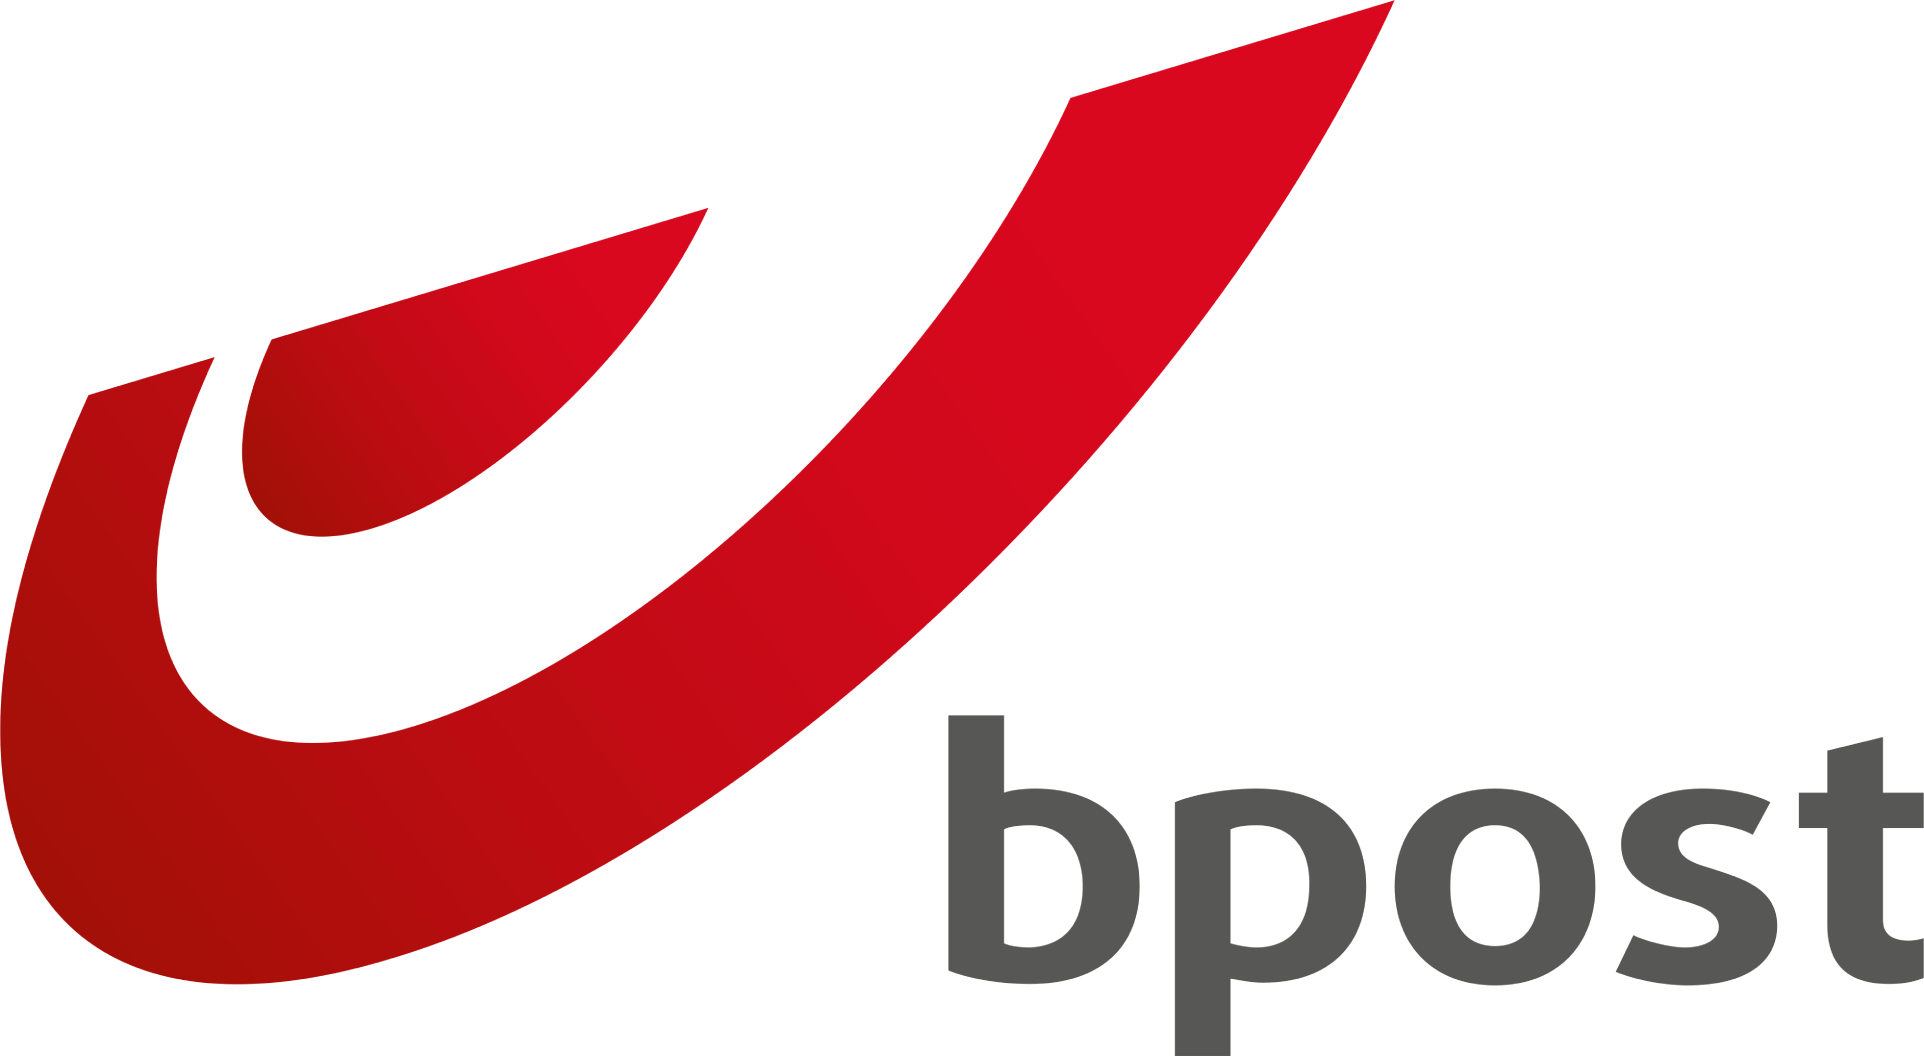 Bpost-logo